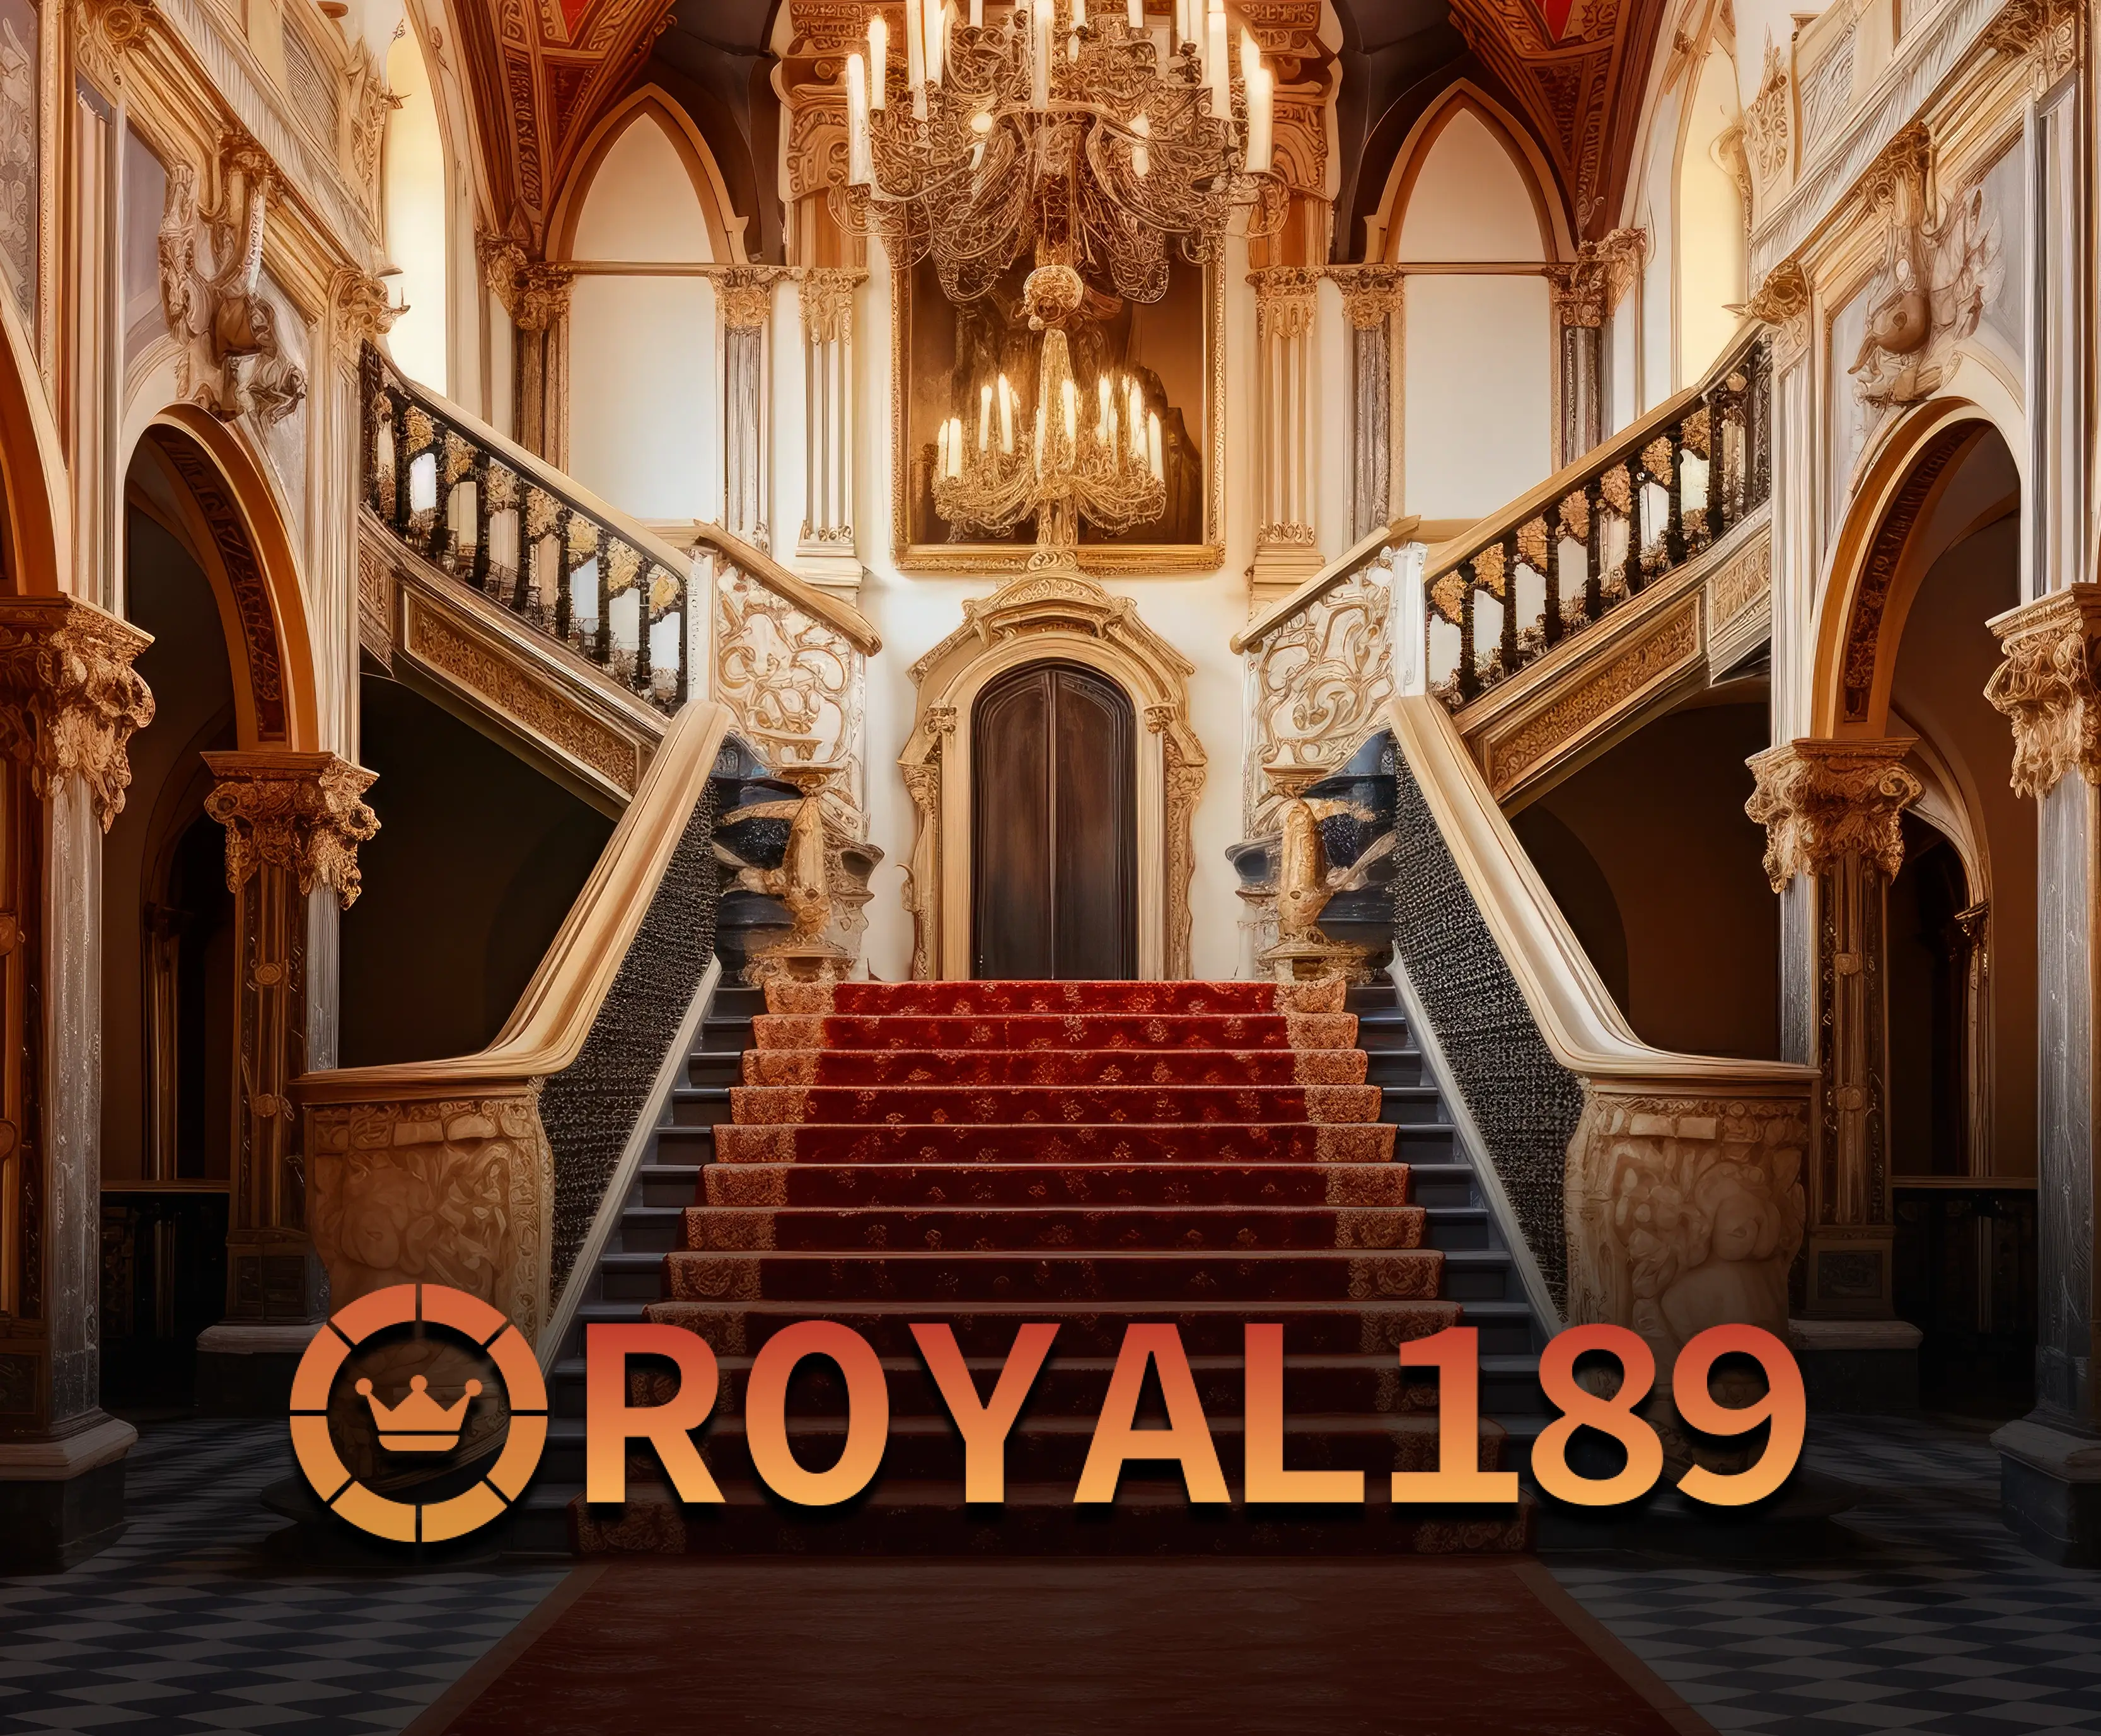 Royal189